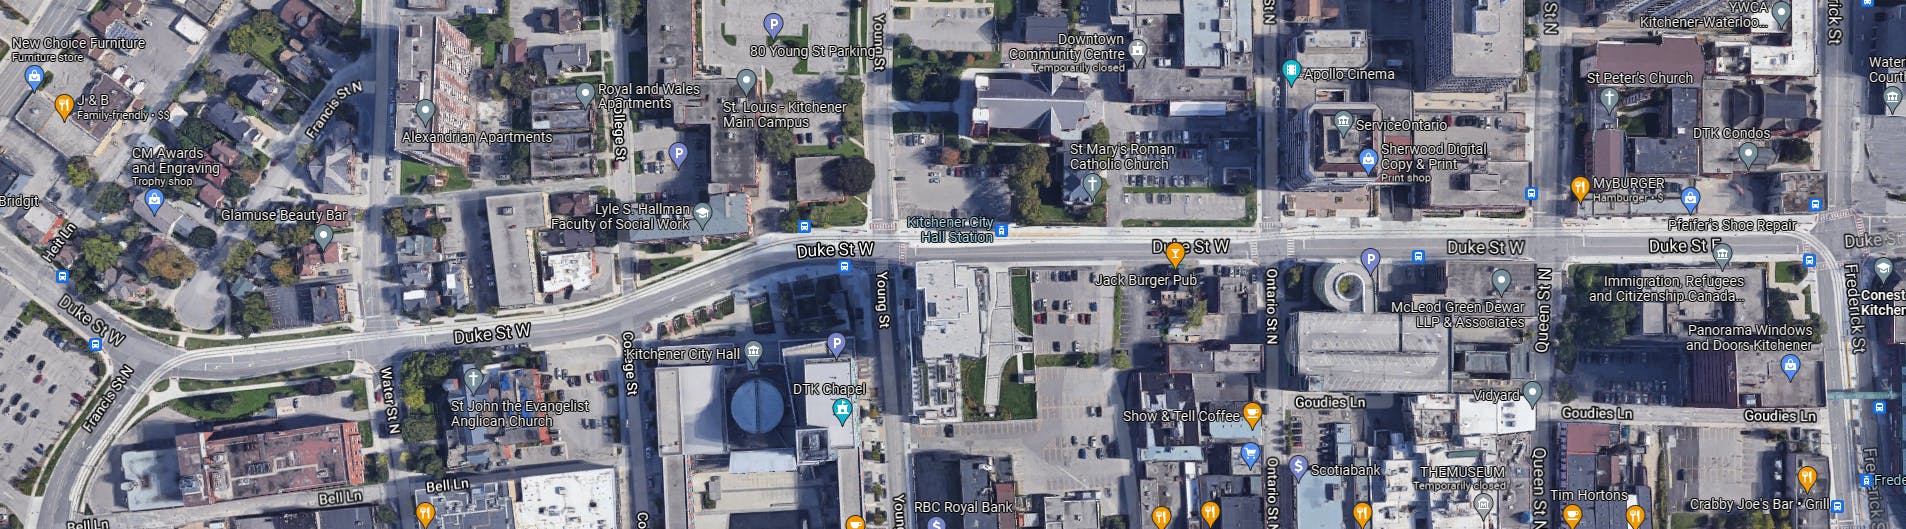 Aerial Image of Duke Street.png